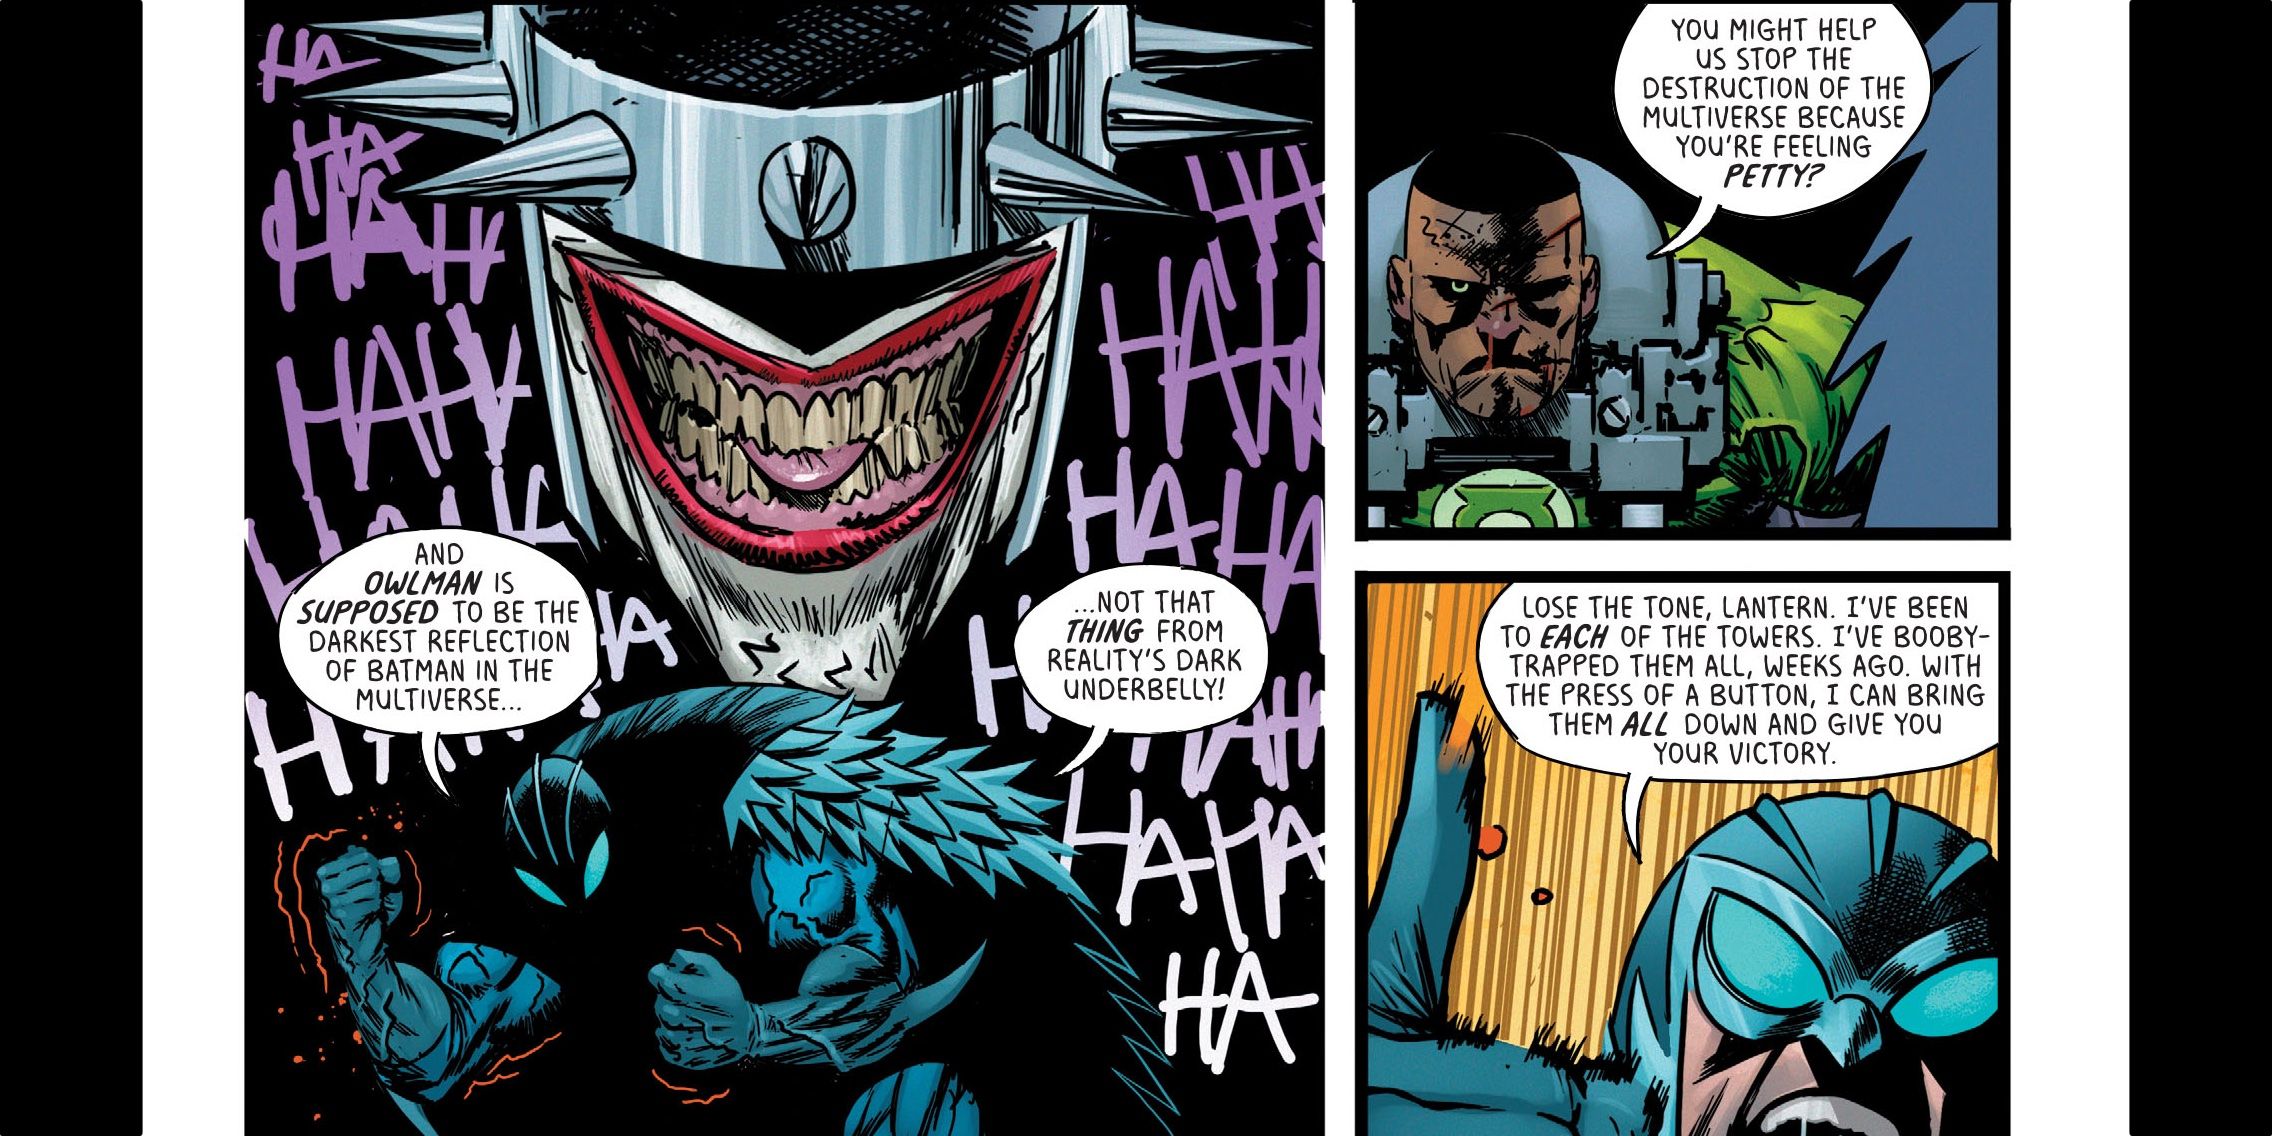 The Original Evil Batman Returns in DC’s Biggest Twist Yet